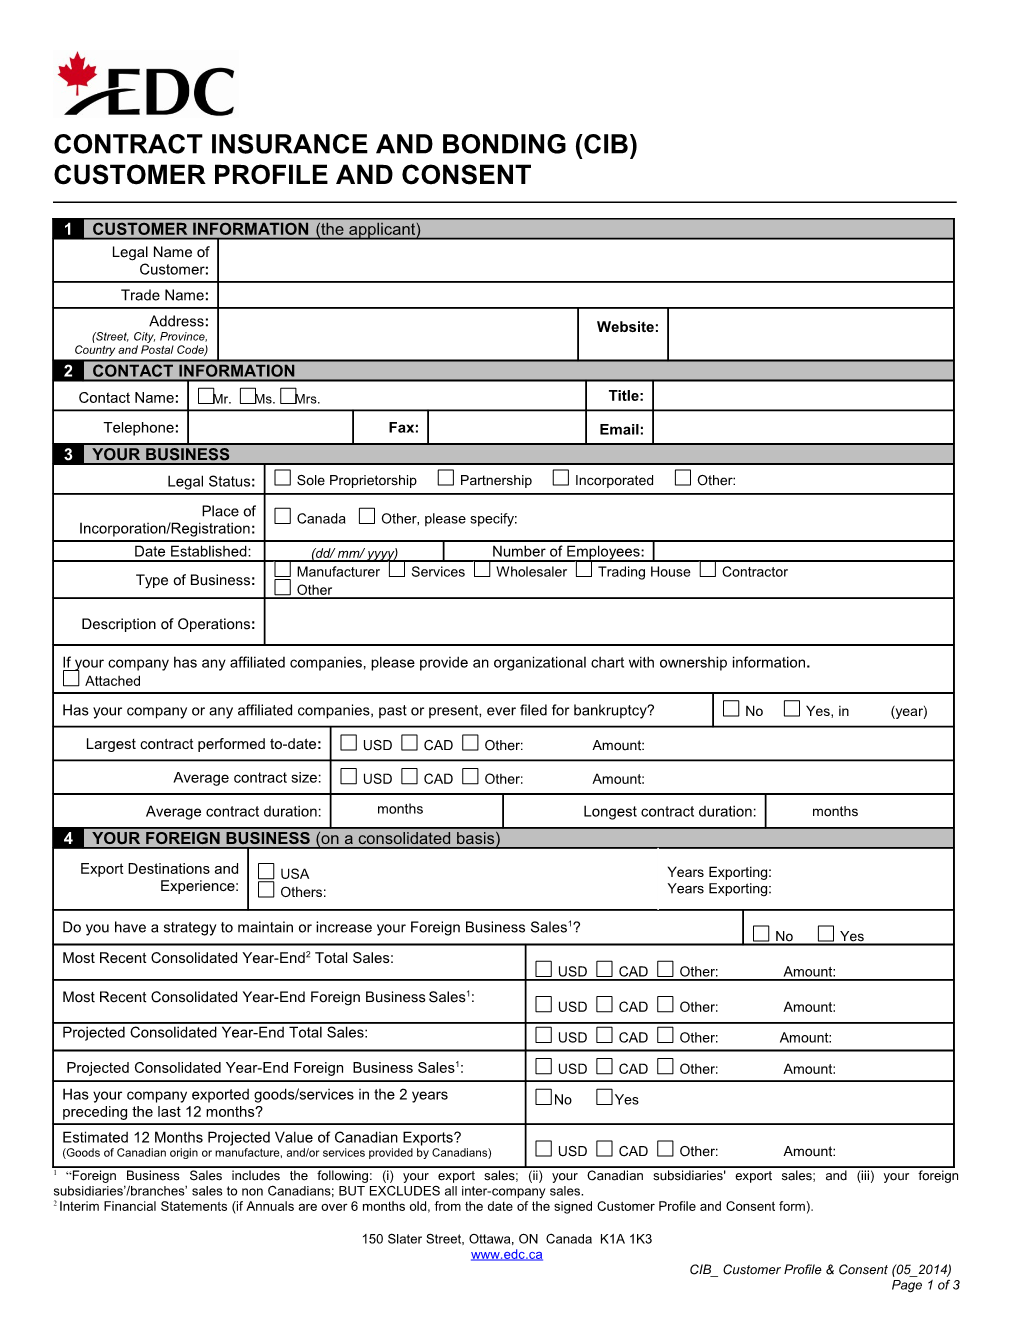 Customer Profile and Consent Form - Export Development Canada (EDC)